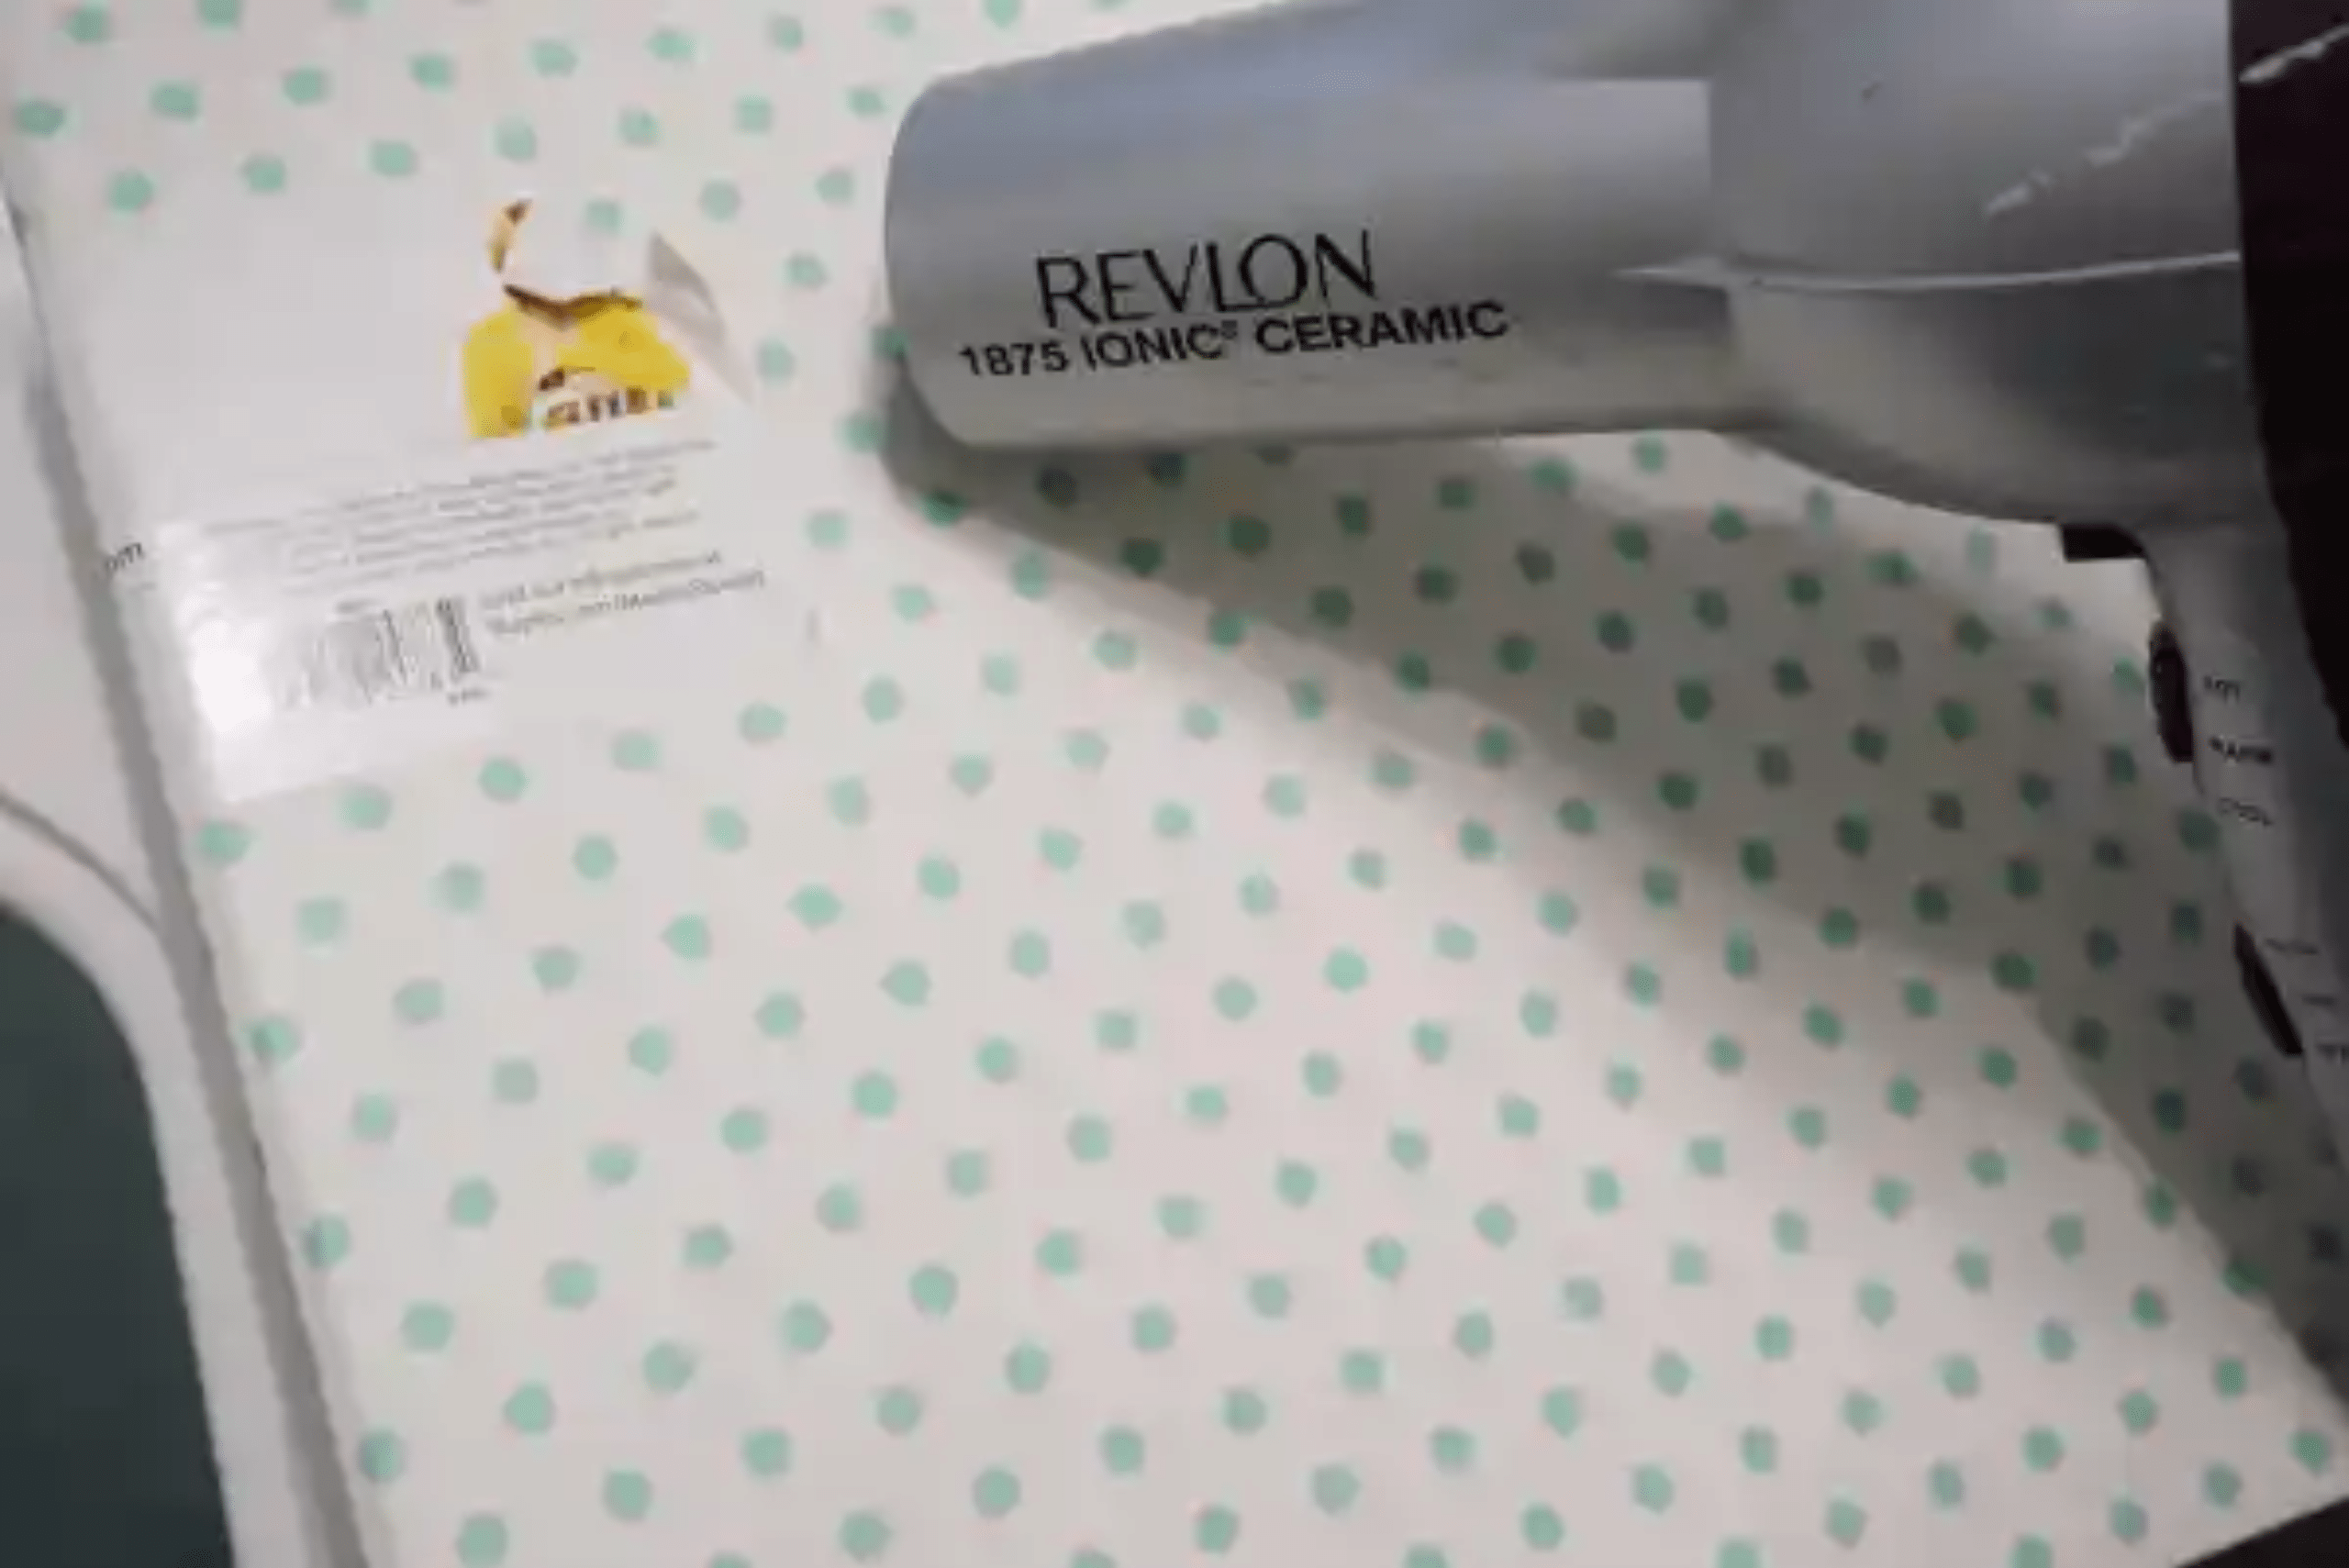 Hair dryer applying heat to sticker.